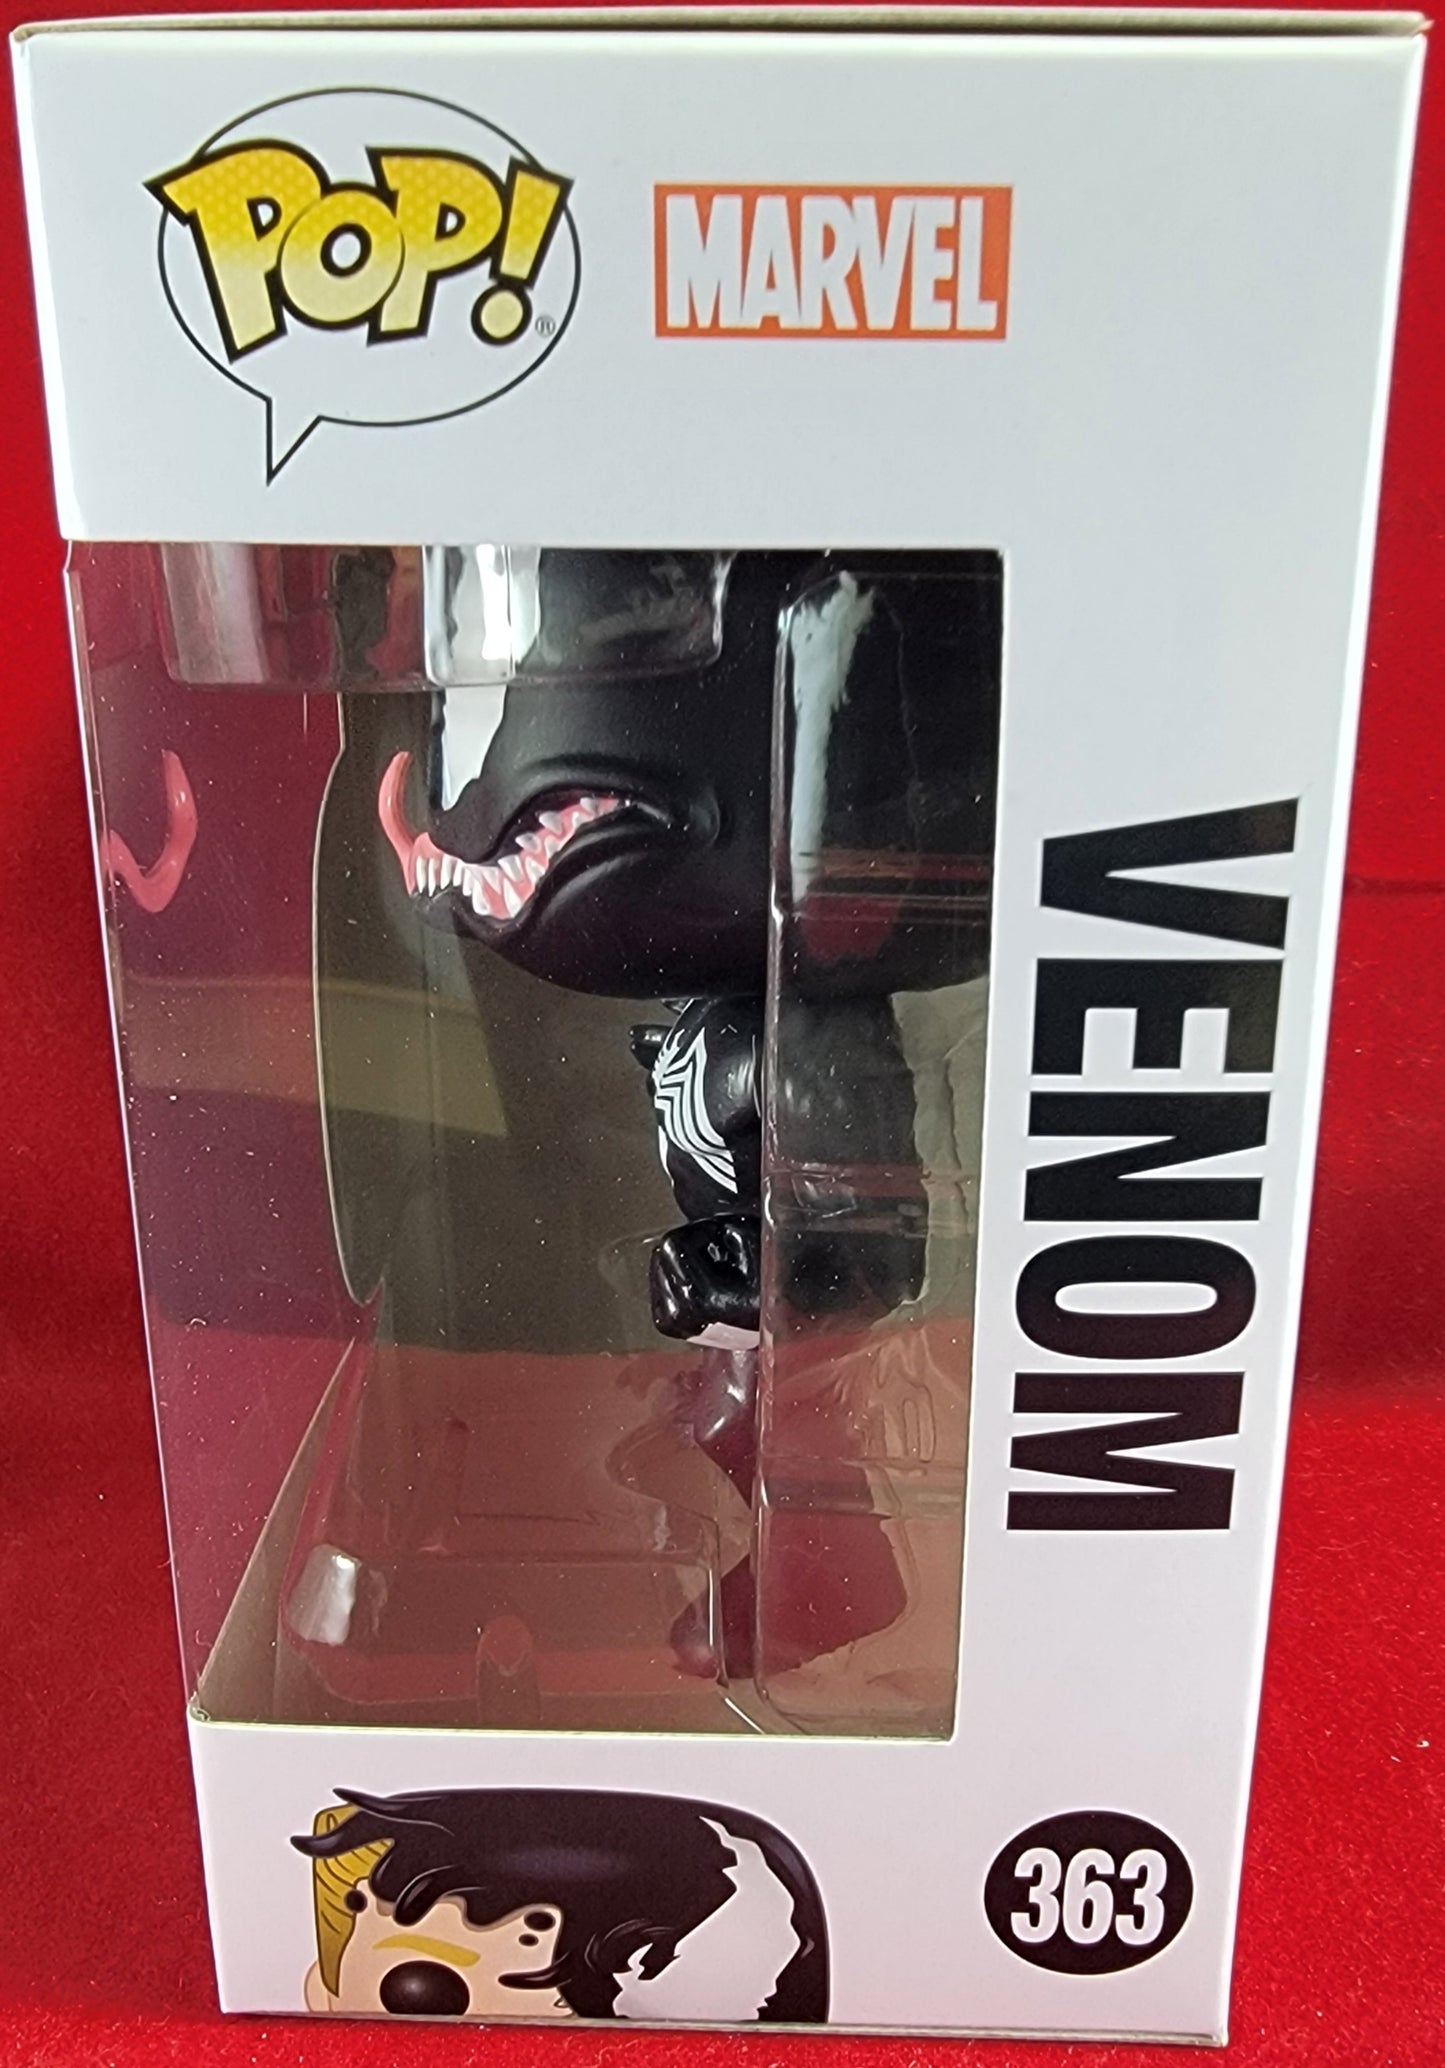 Venom funko # 363 (nib)
With pop protector